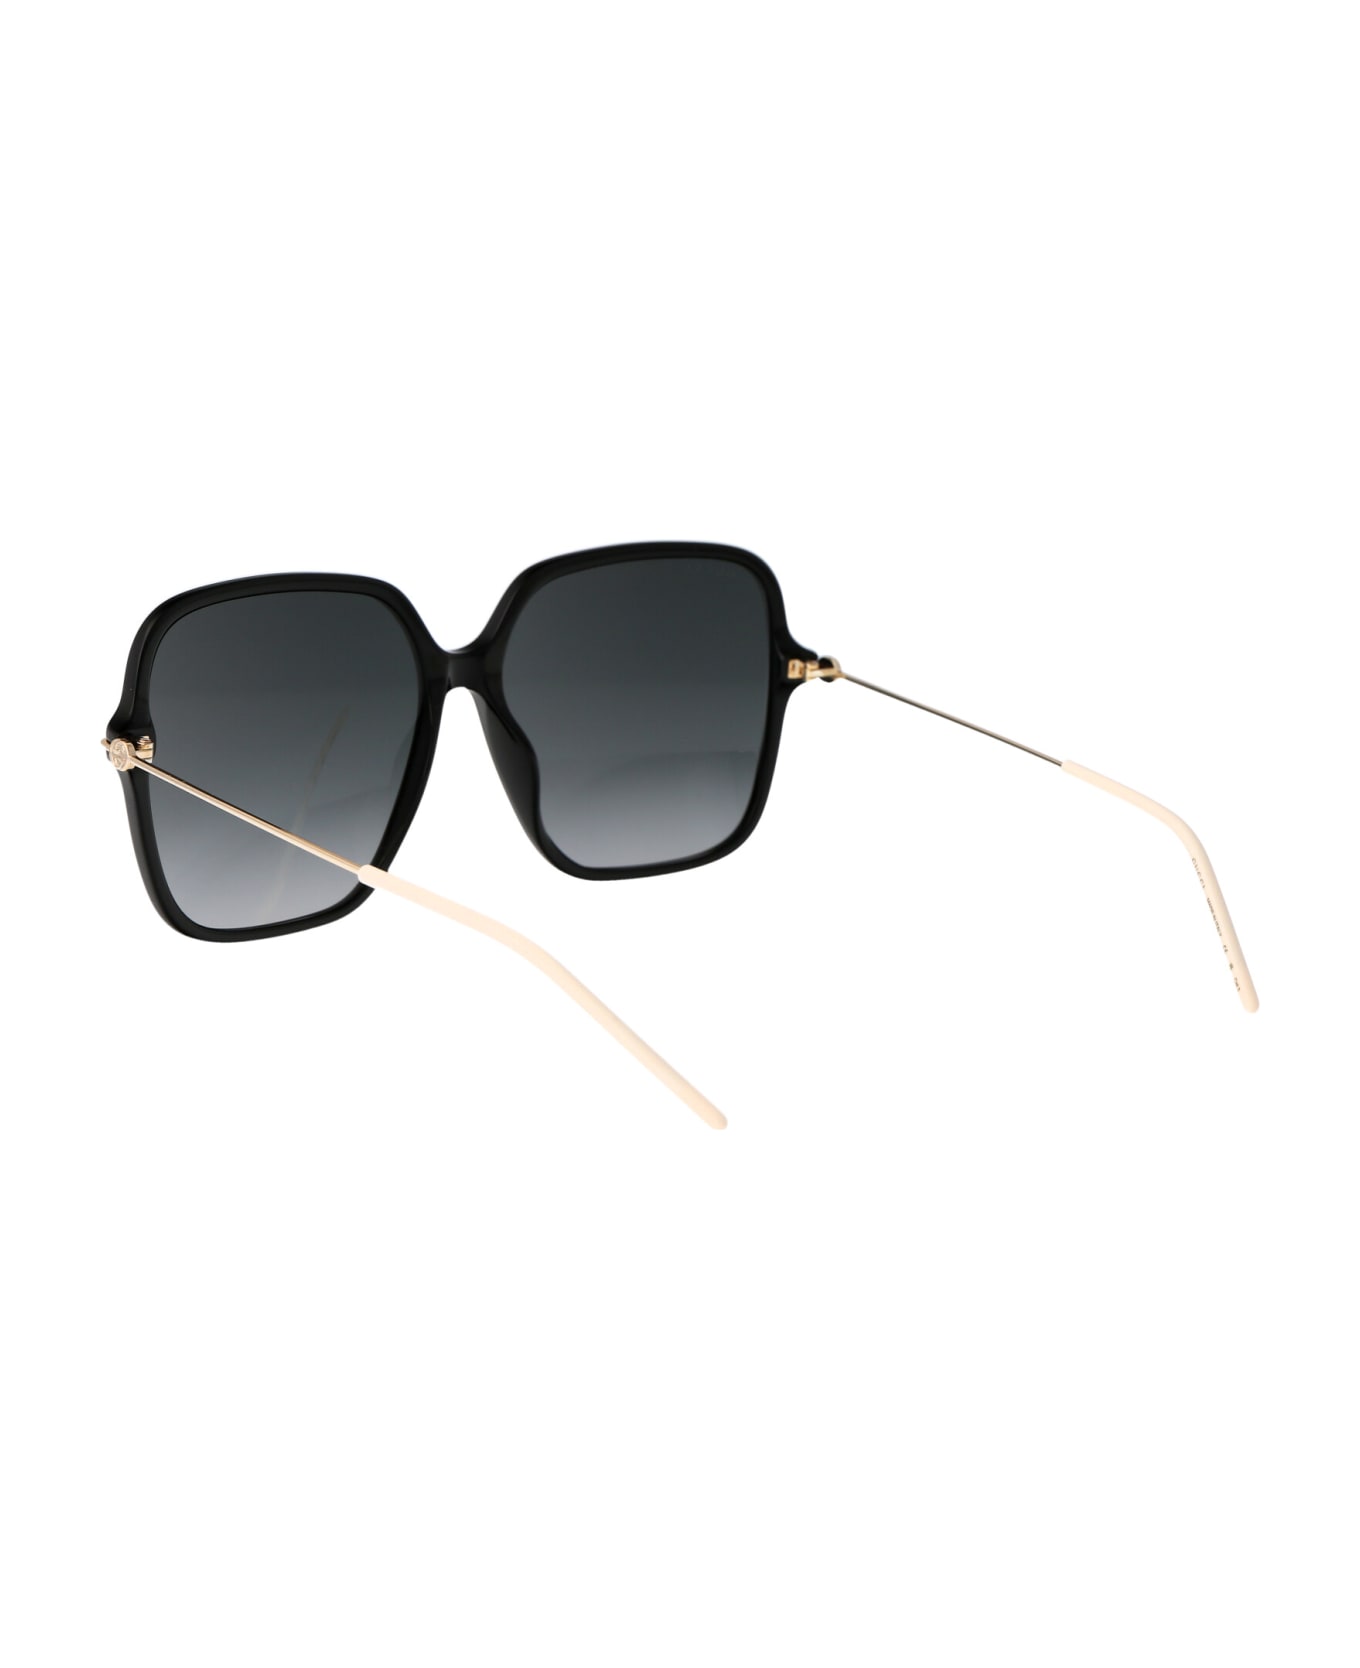 Gucci Eyewear Gg1267s Sunglasses - 001 BLACK GOLD GREY